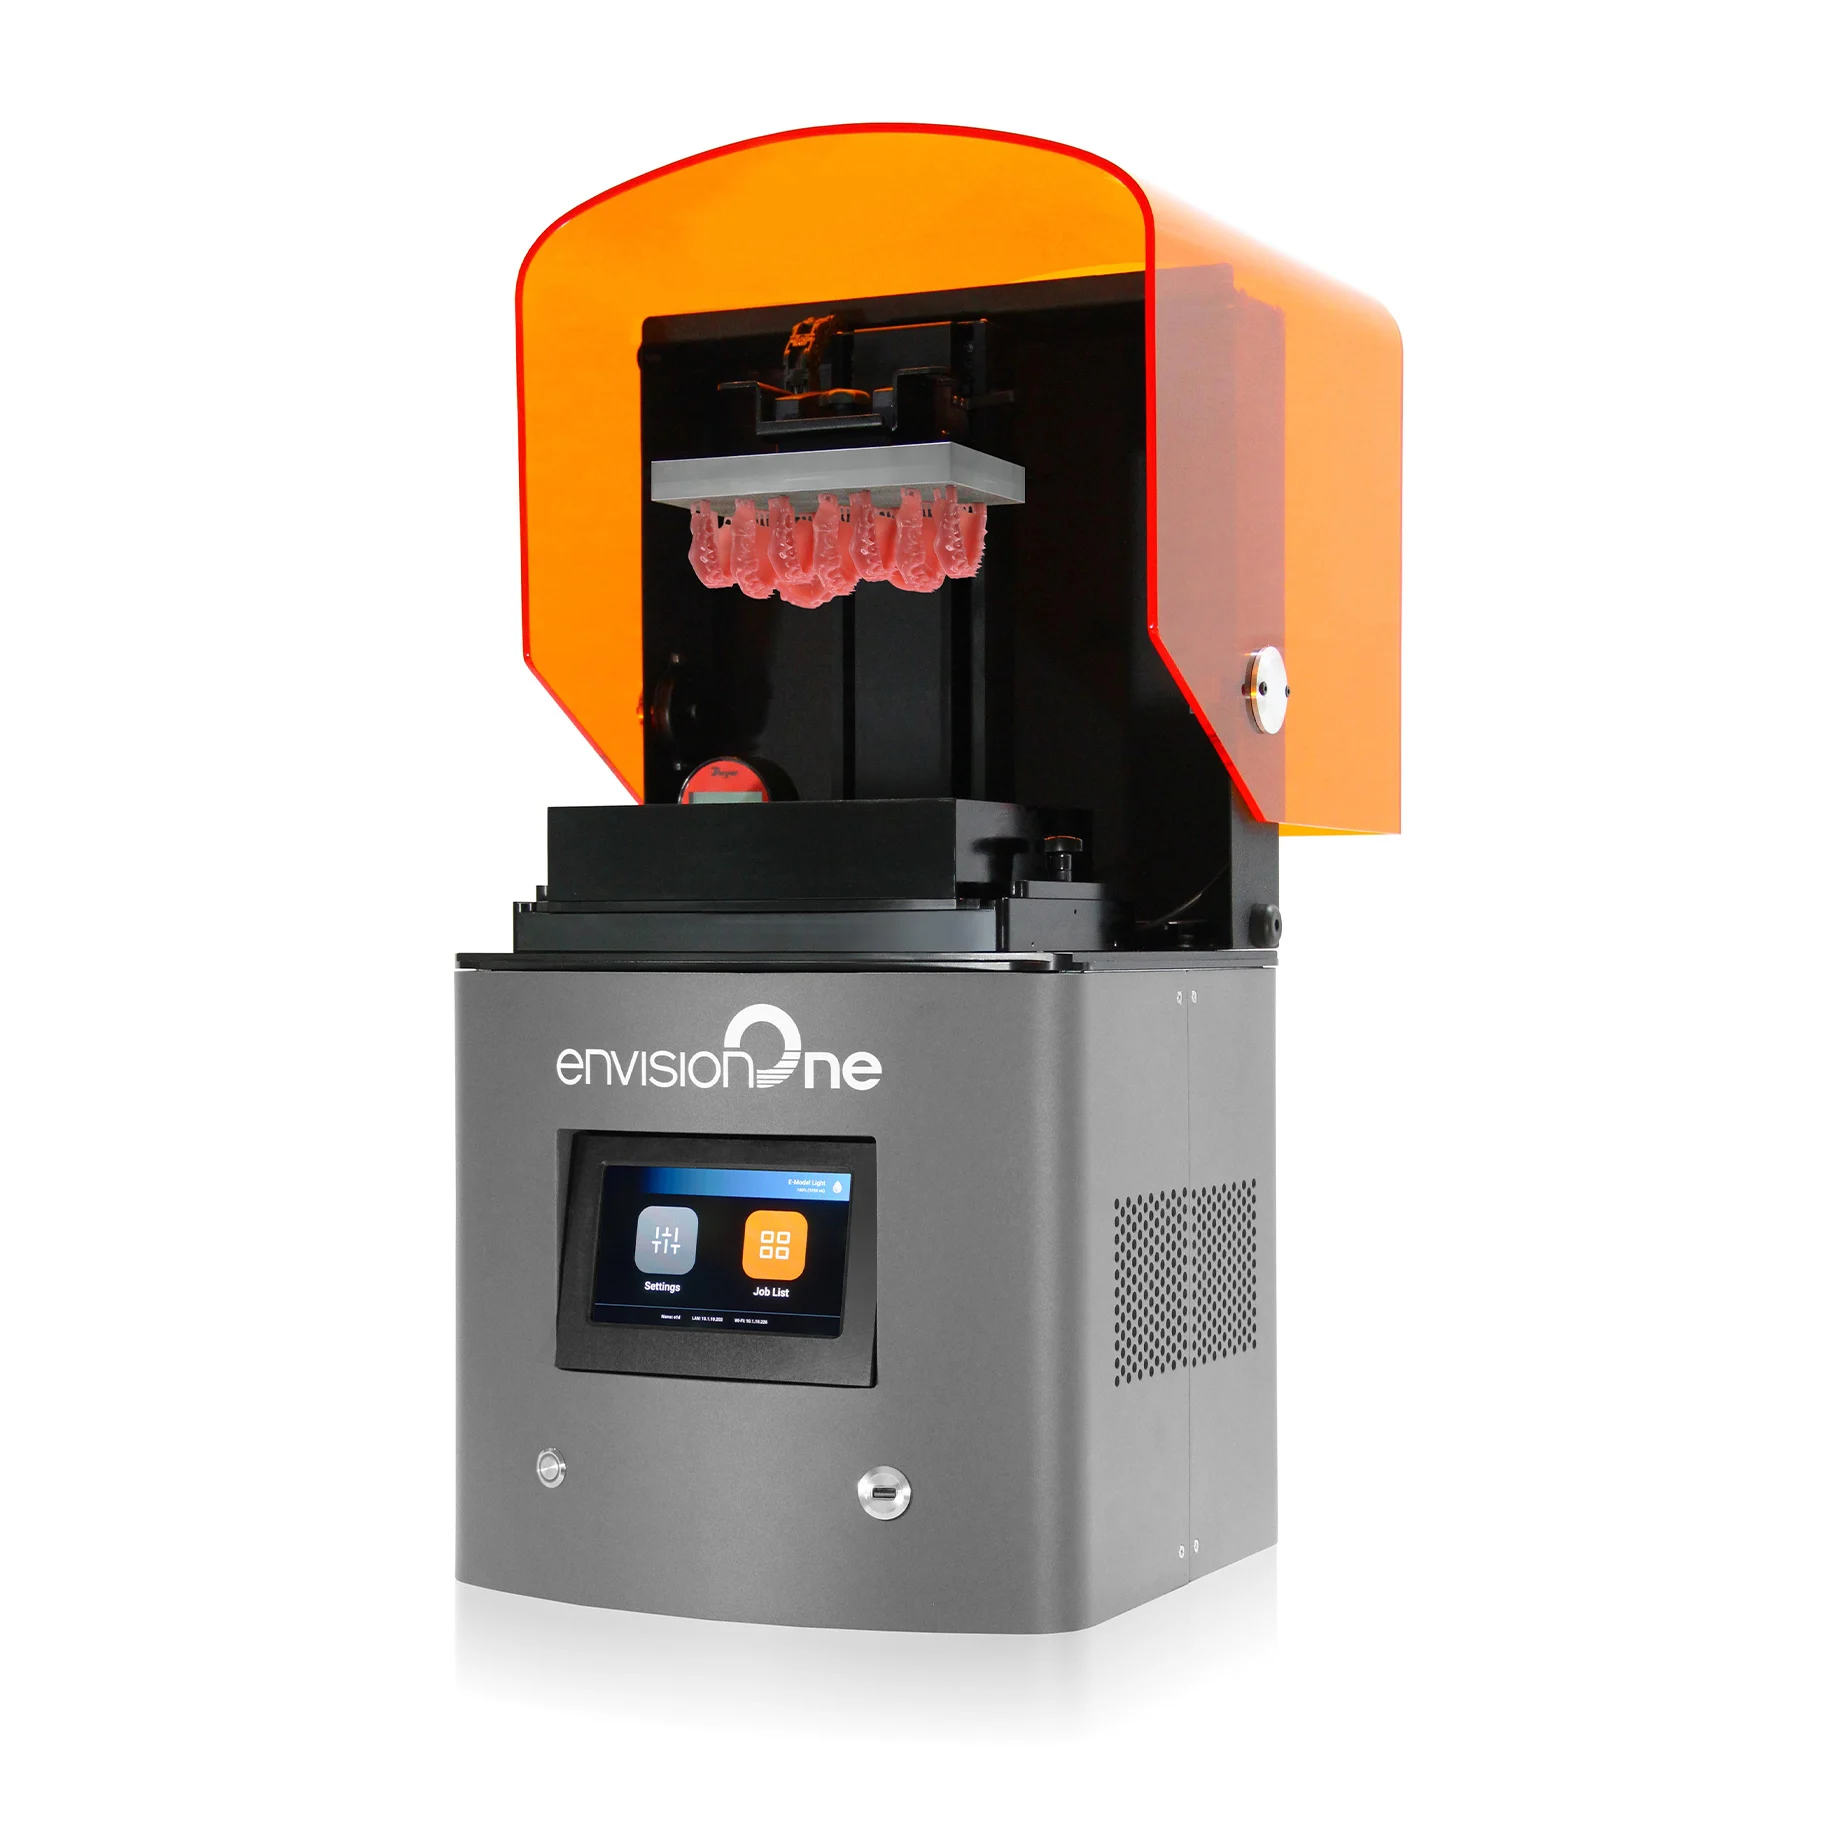 envisionOne 3D Printer